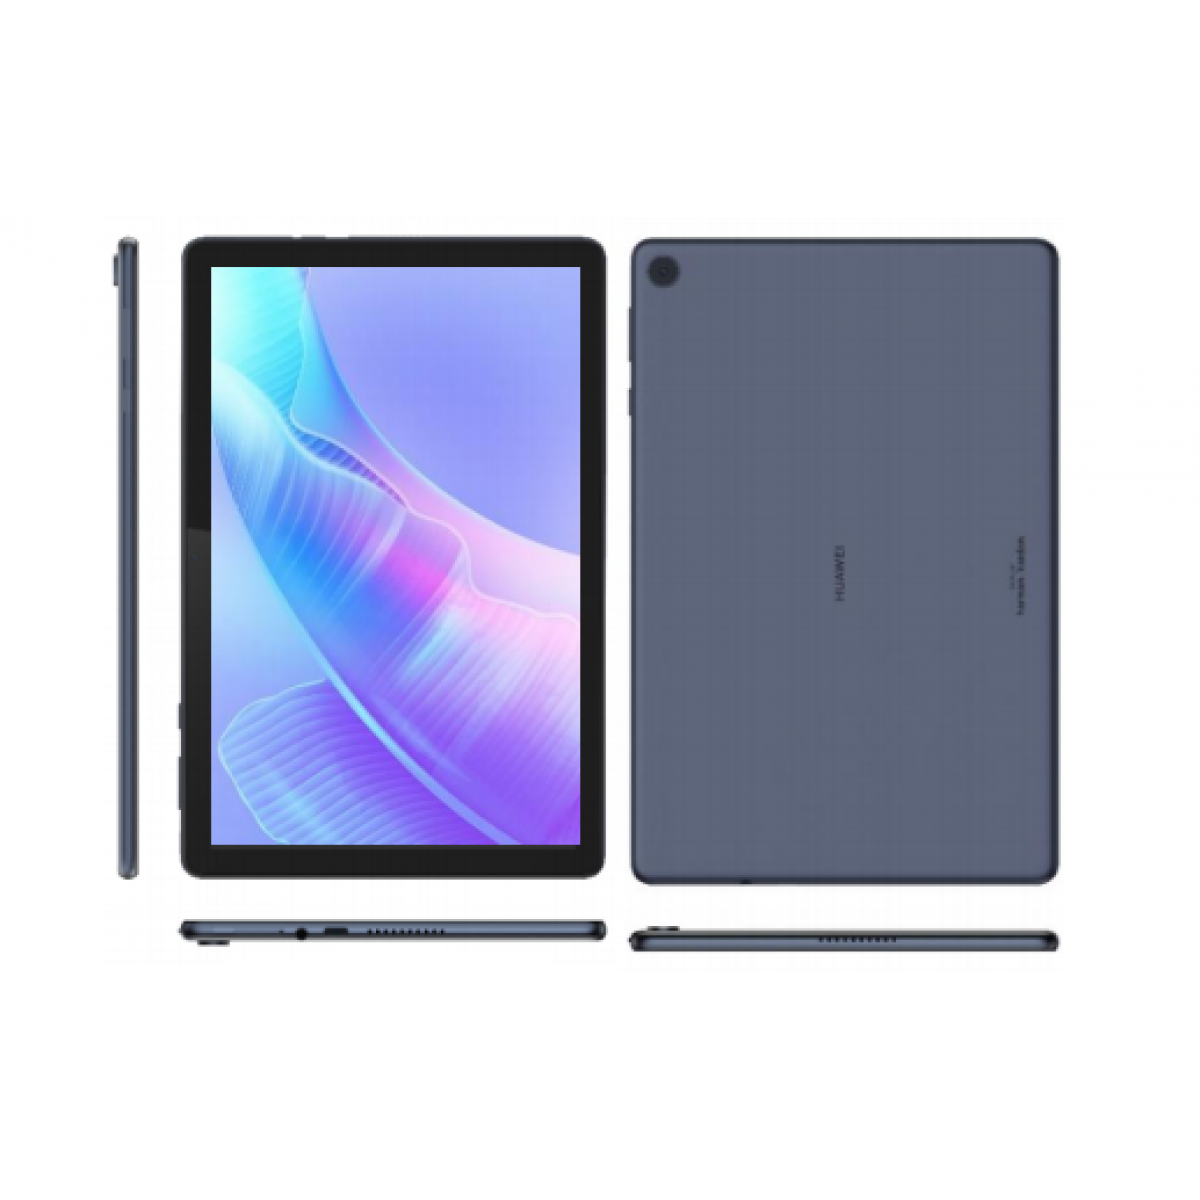 Huawei Tablet Matepad T 10s 10 1 Gts Amman Jordan Gts Amman Jordan